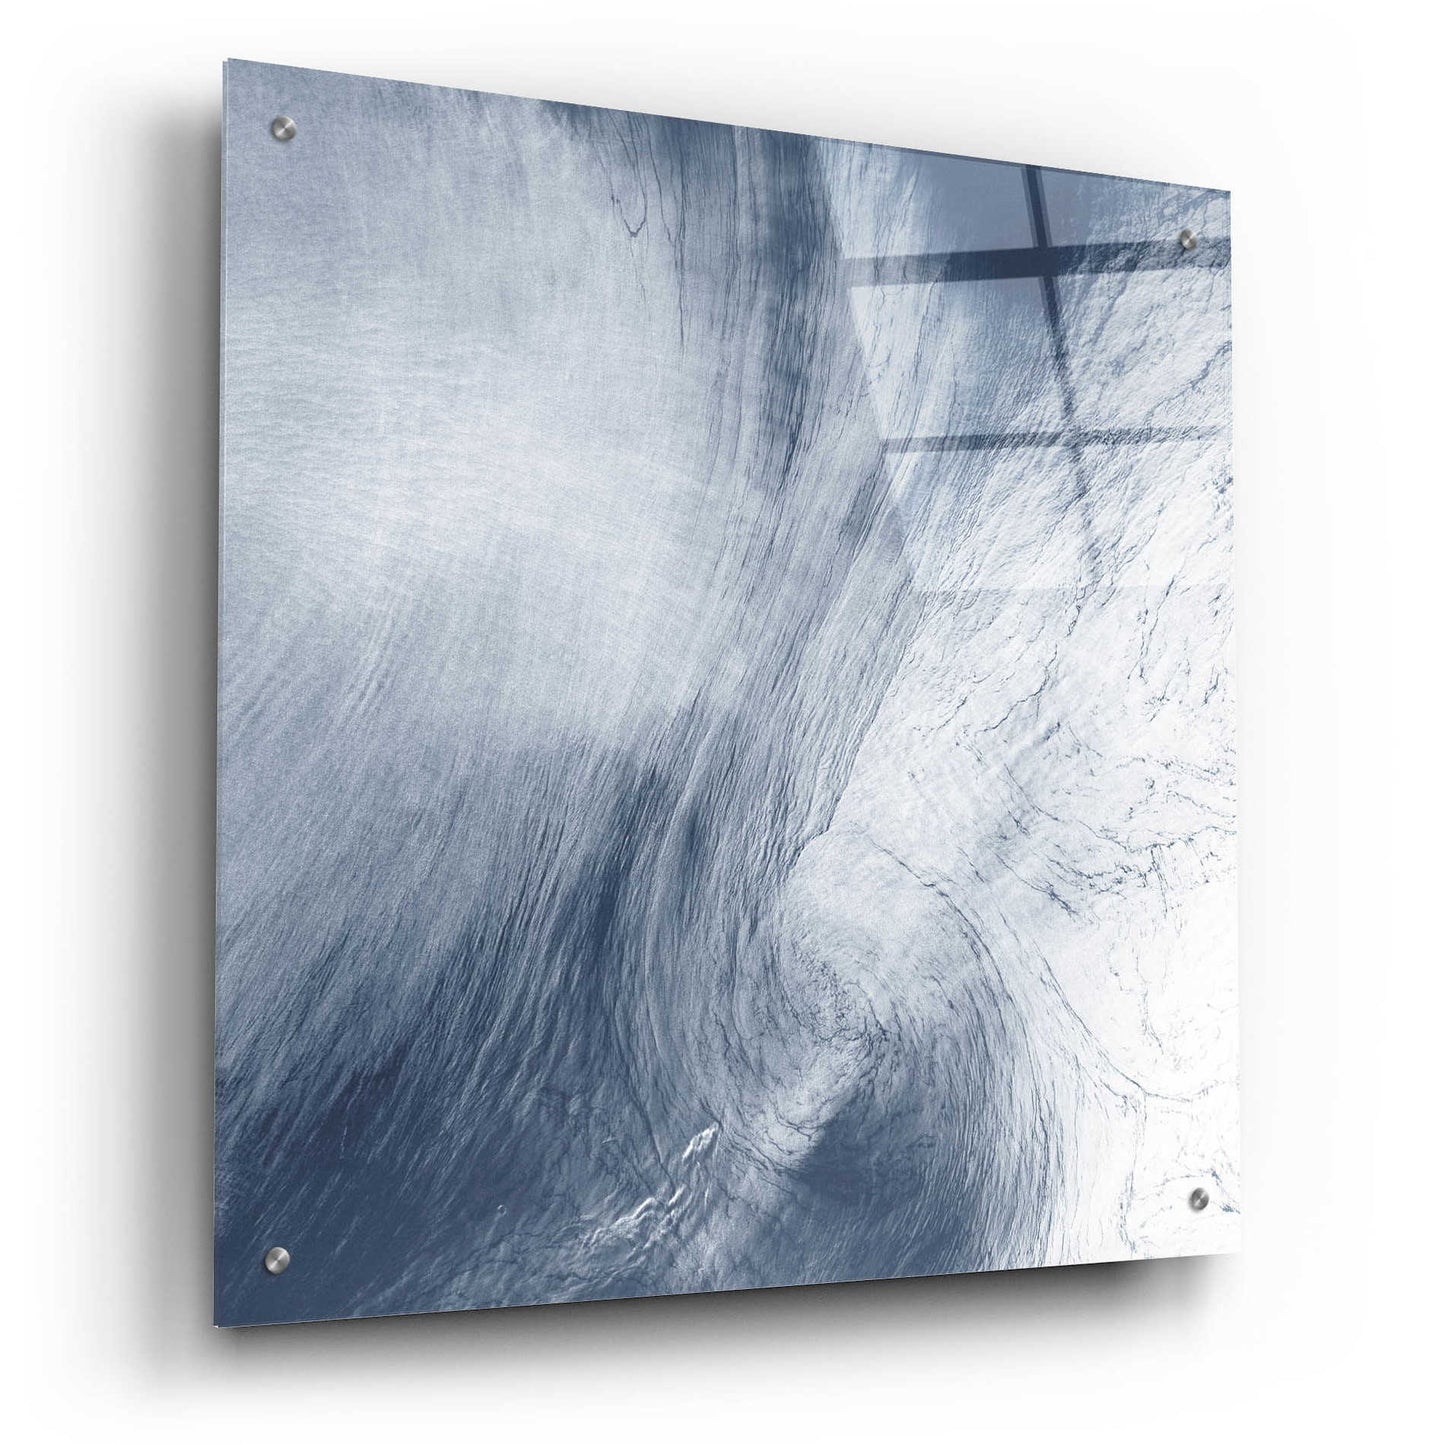 Epic Art 'Earth as Art: Whirlpool Clouds' Acrylic Glass Wall Art,24x24